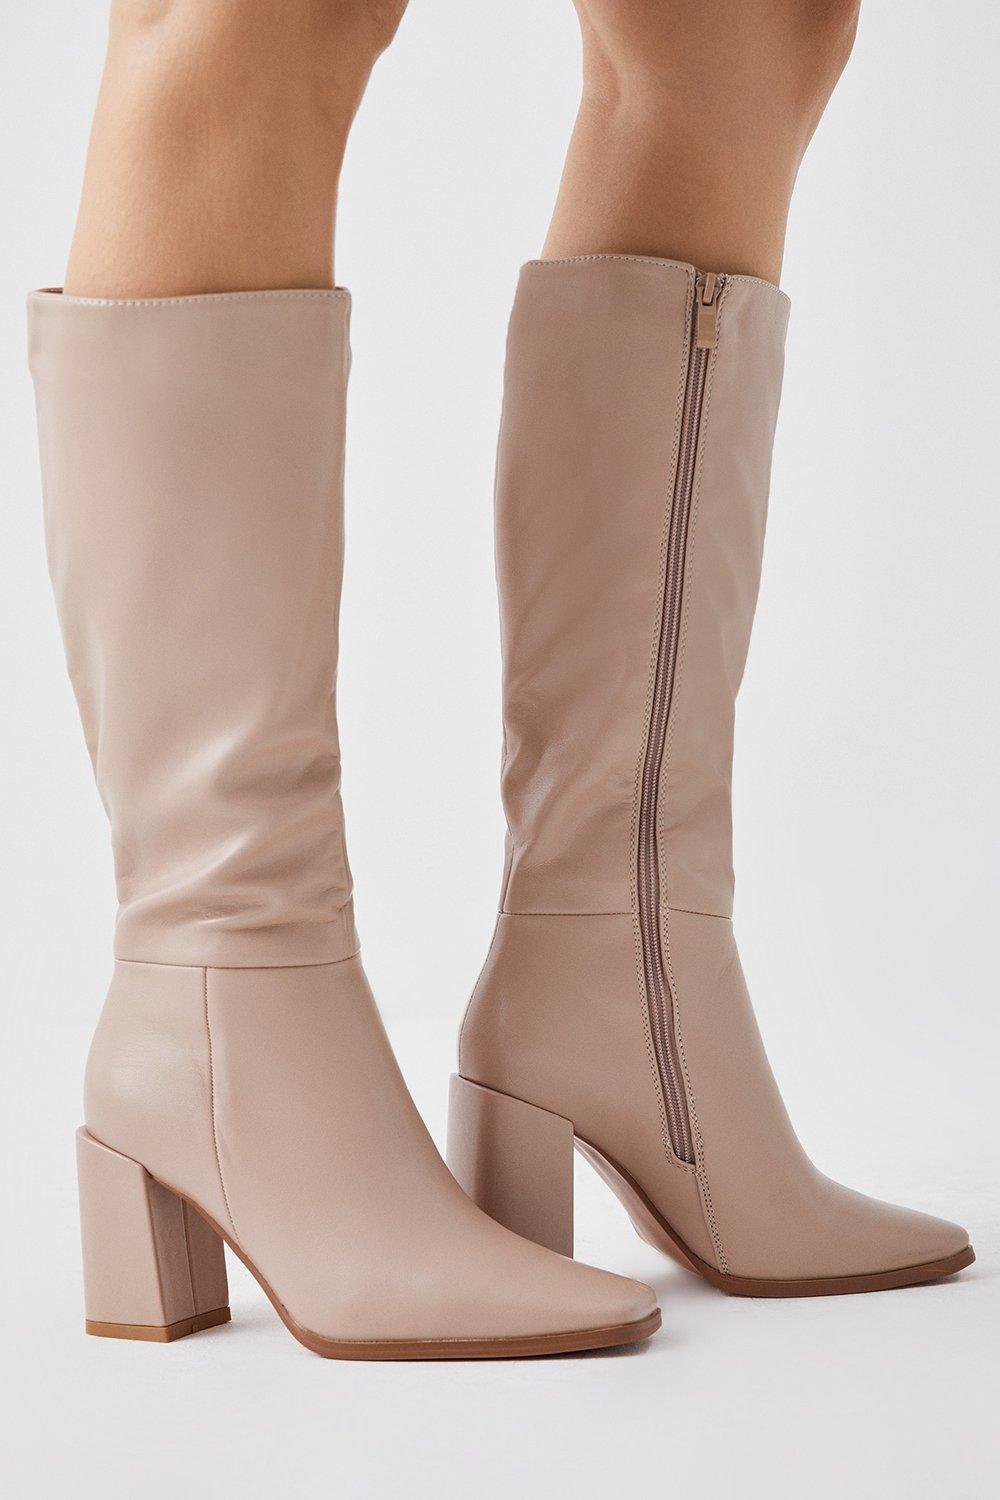 Women’s Kristen Square Toe Clean Knee High Boots - beige - 5